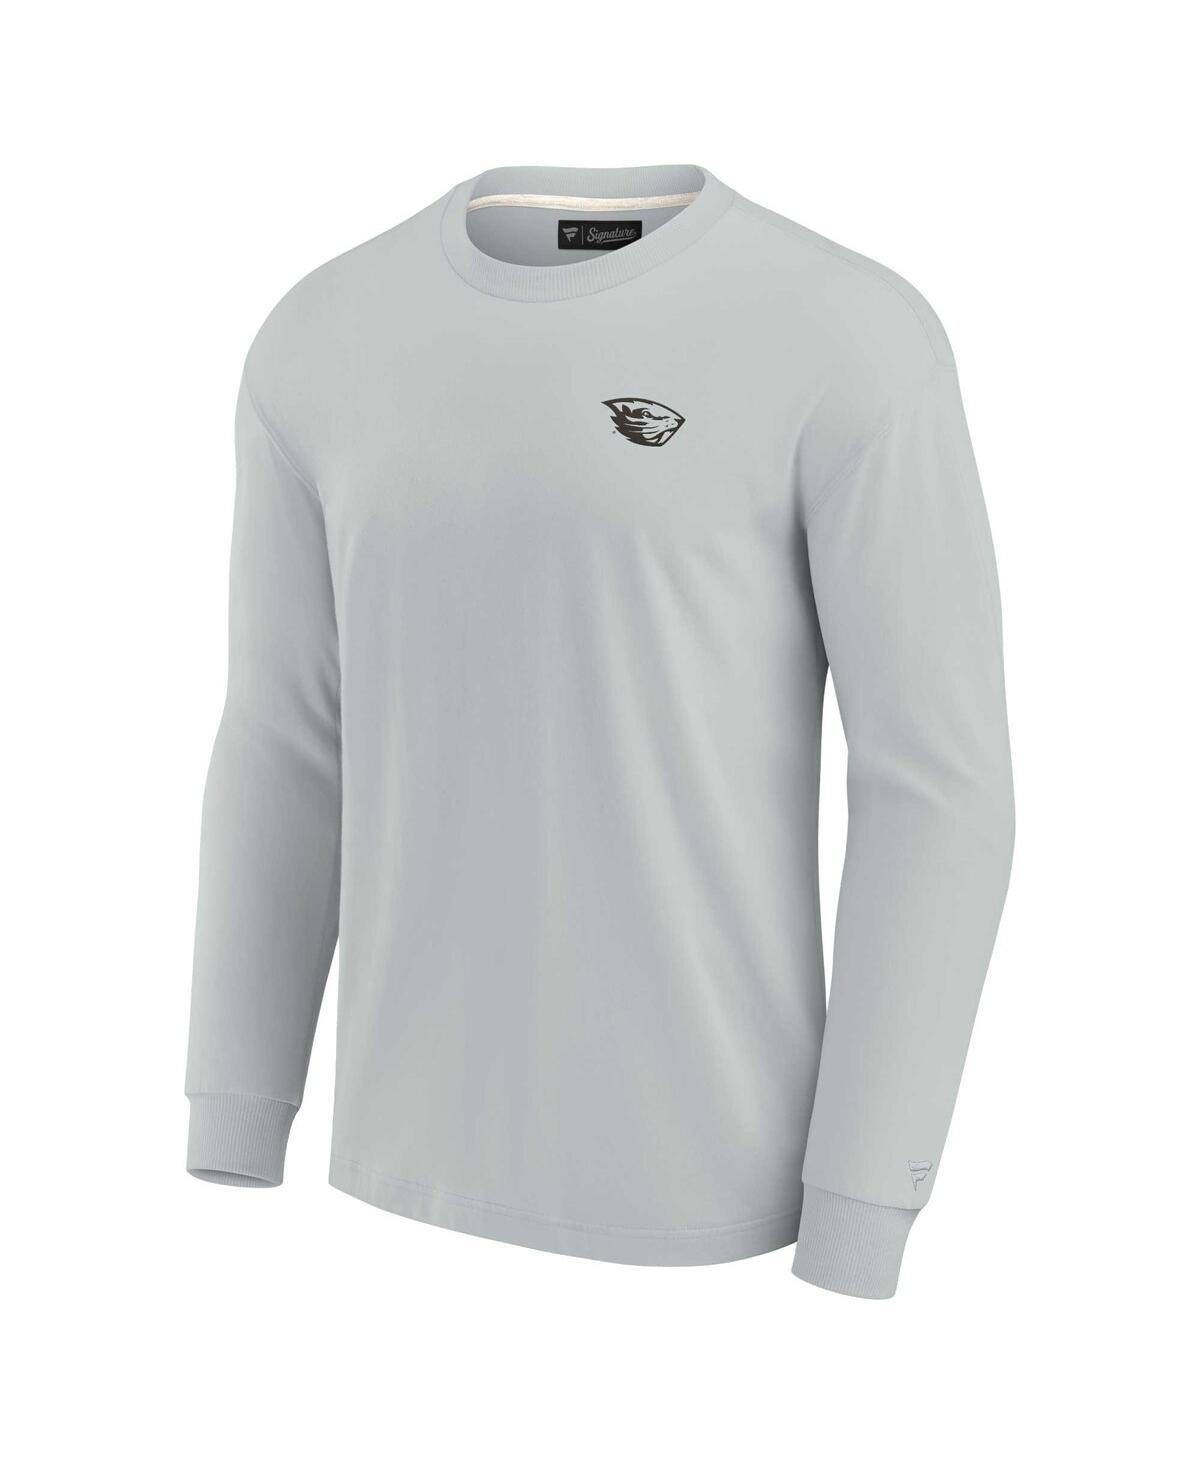 Shop Fanatics Signature Men's And Women's  Gray Oregon State Beavers Super Soft Long Sleeve T-shirt